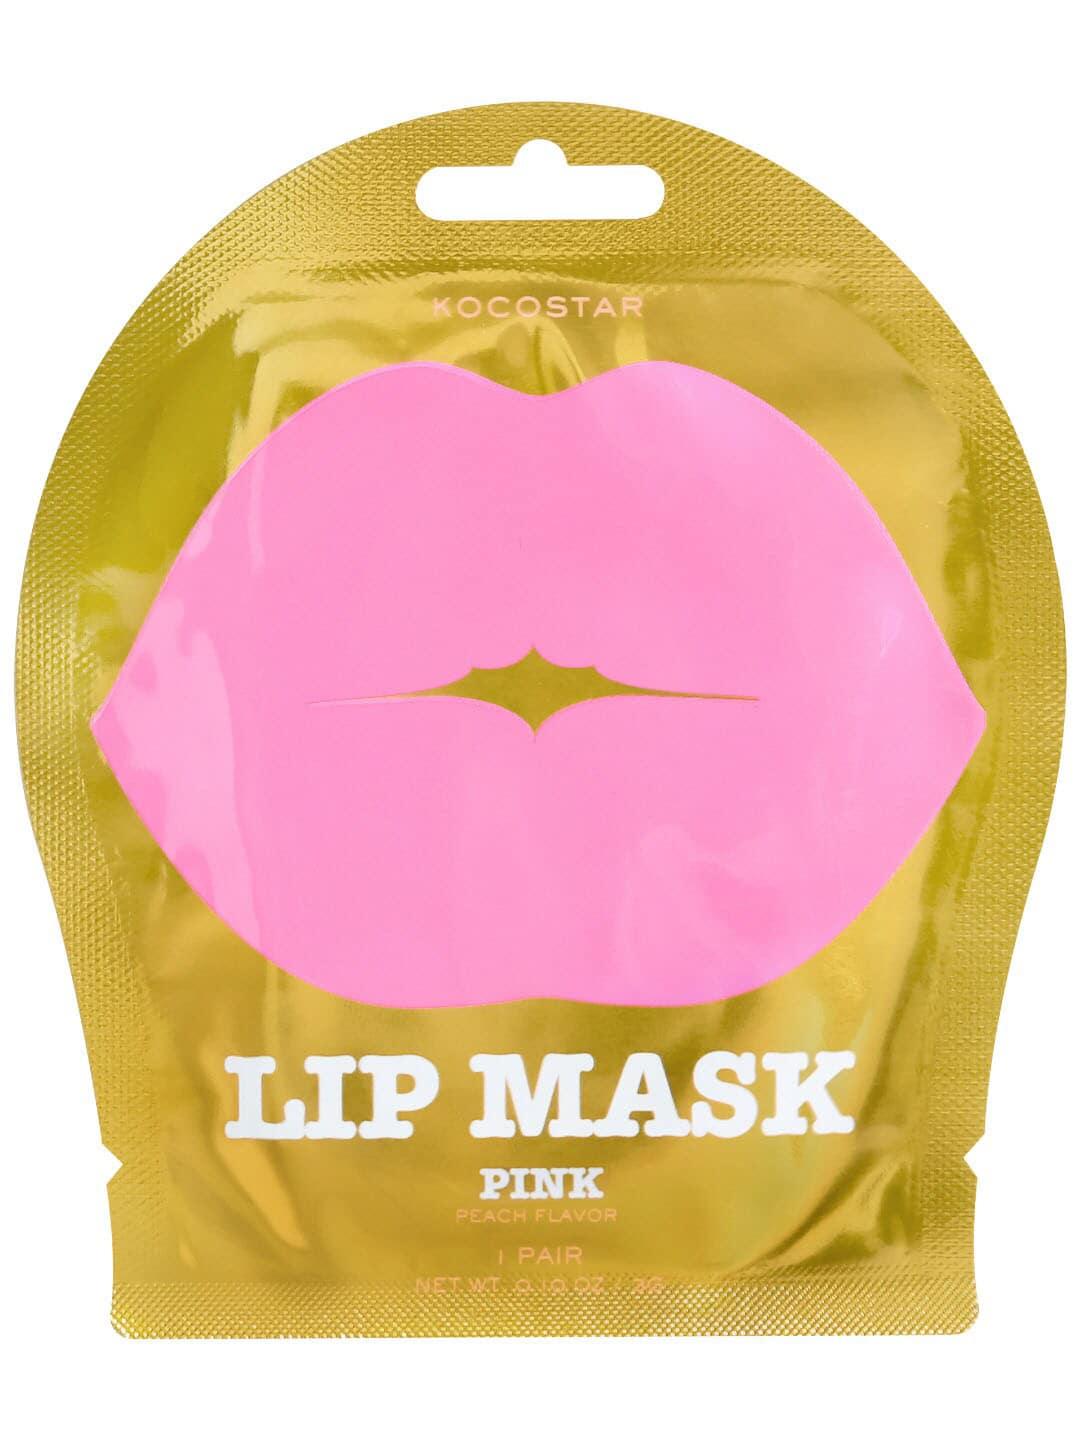 KOCOSTAR Firming & Radiance Peach Flavour Pink Lip Mask - 3 g